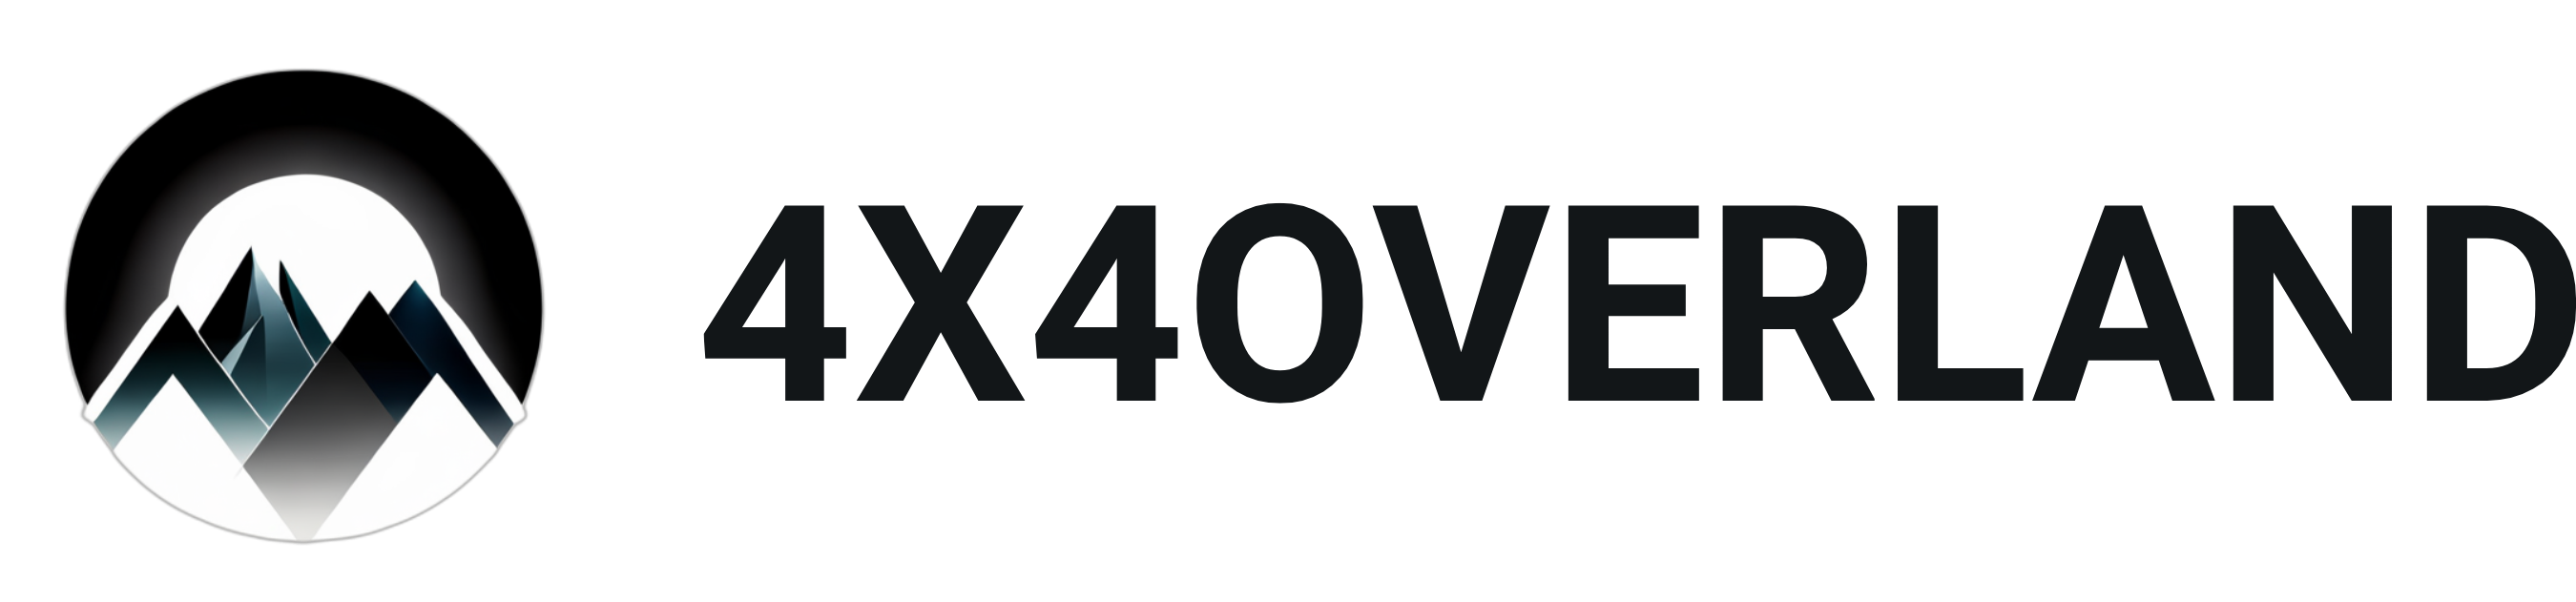 4x4Overland Ltd Business Logo